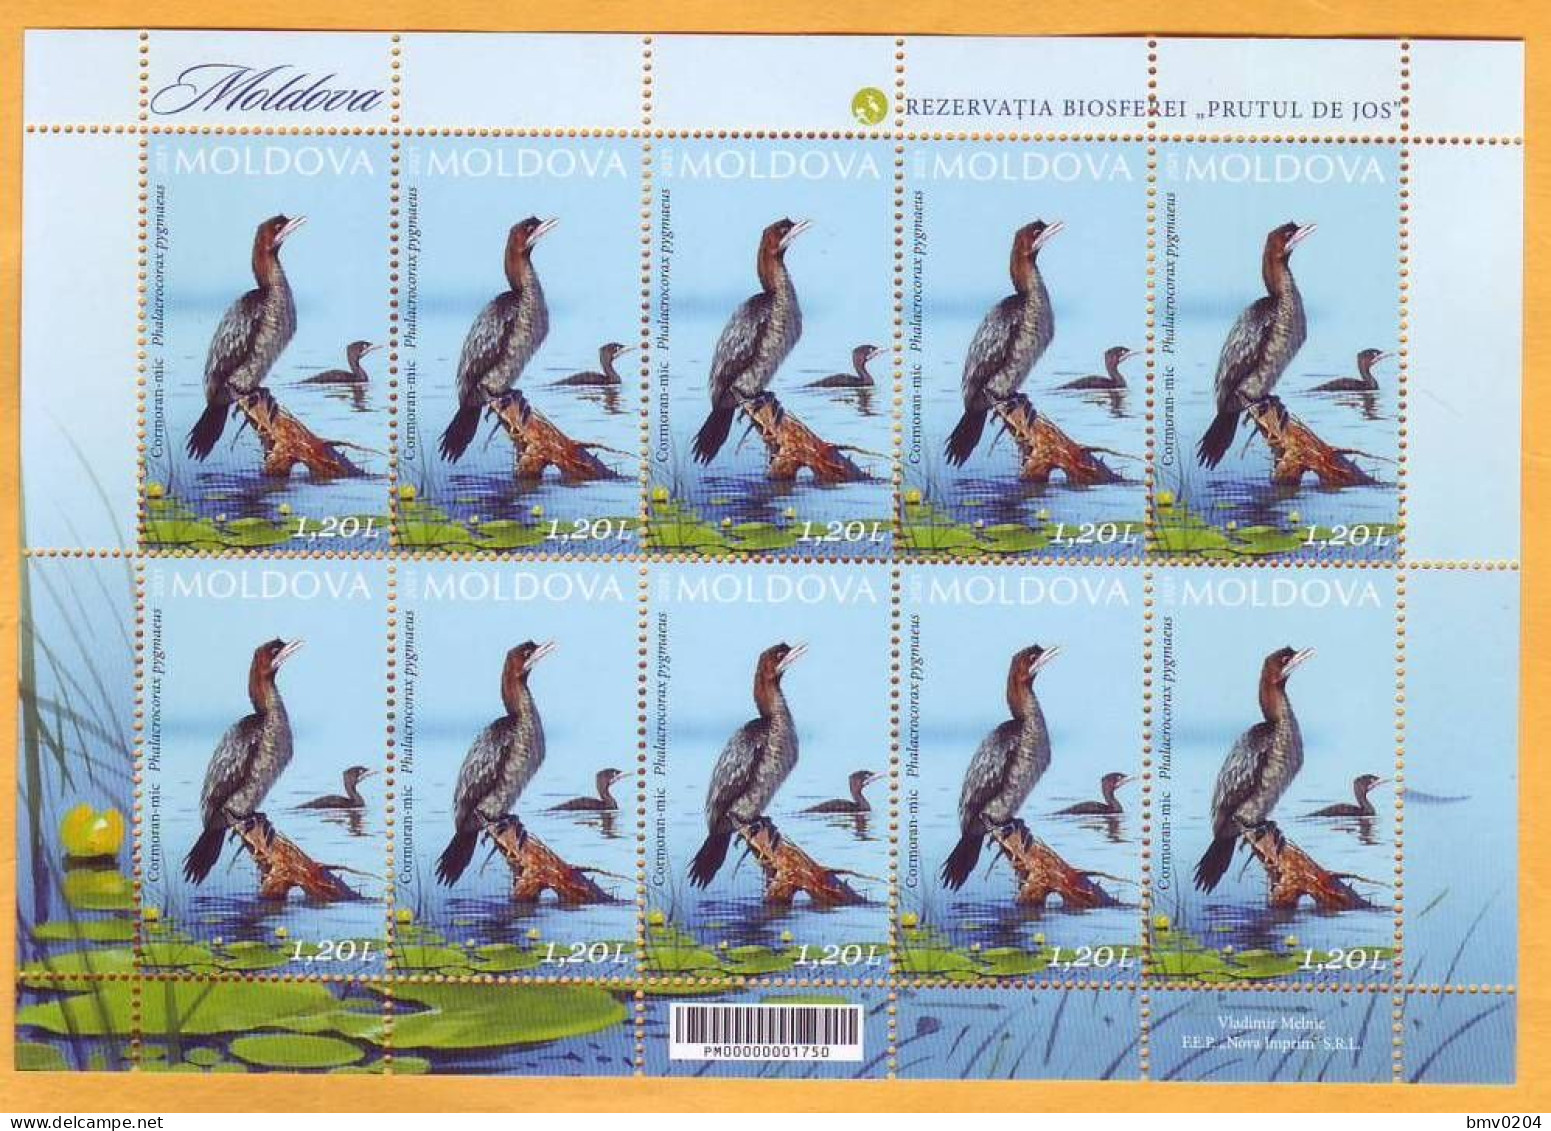 2021 Moldova Moldavie Moldau Romania  Sheet  Lower Prut ”Biosphere Reserve” Birds, Fauna Mint 1.20 - Moldavia